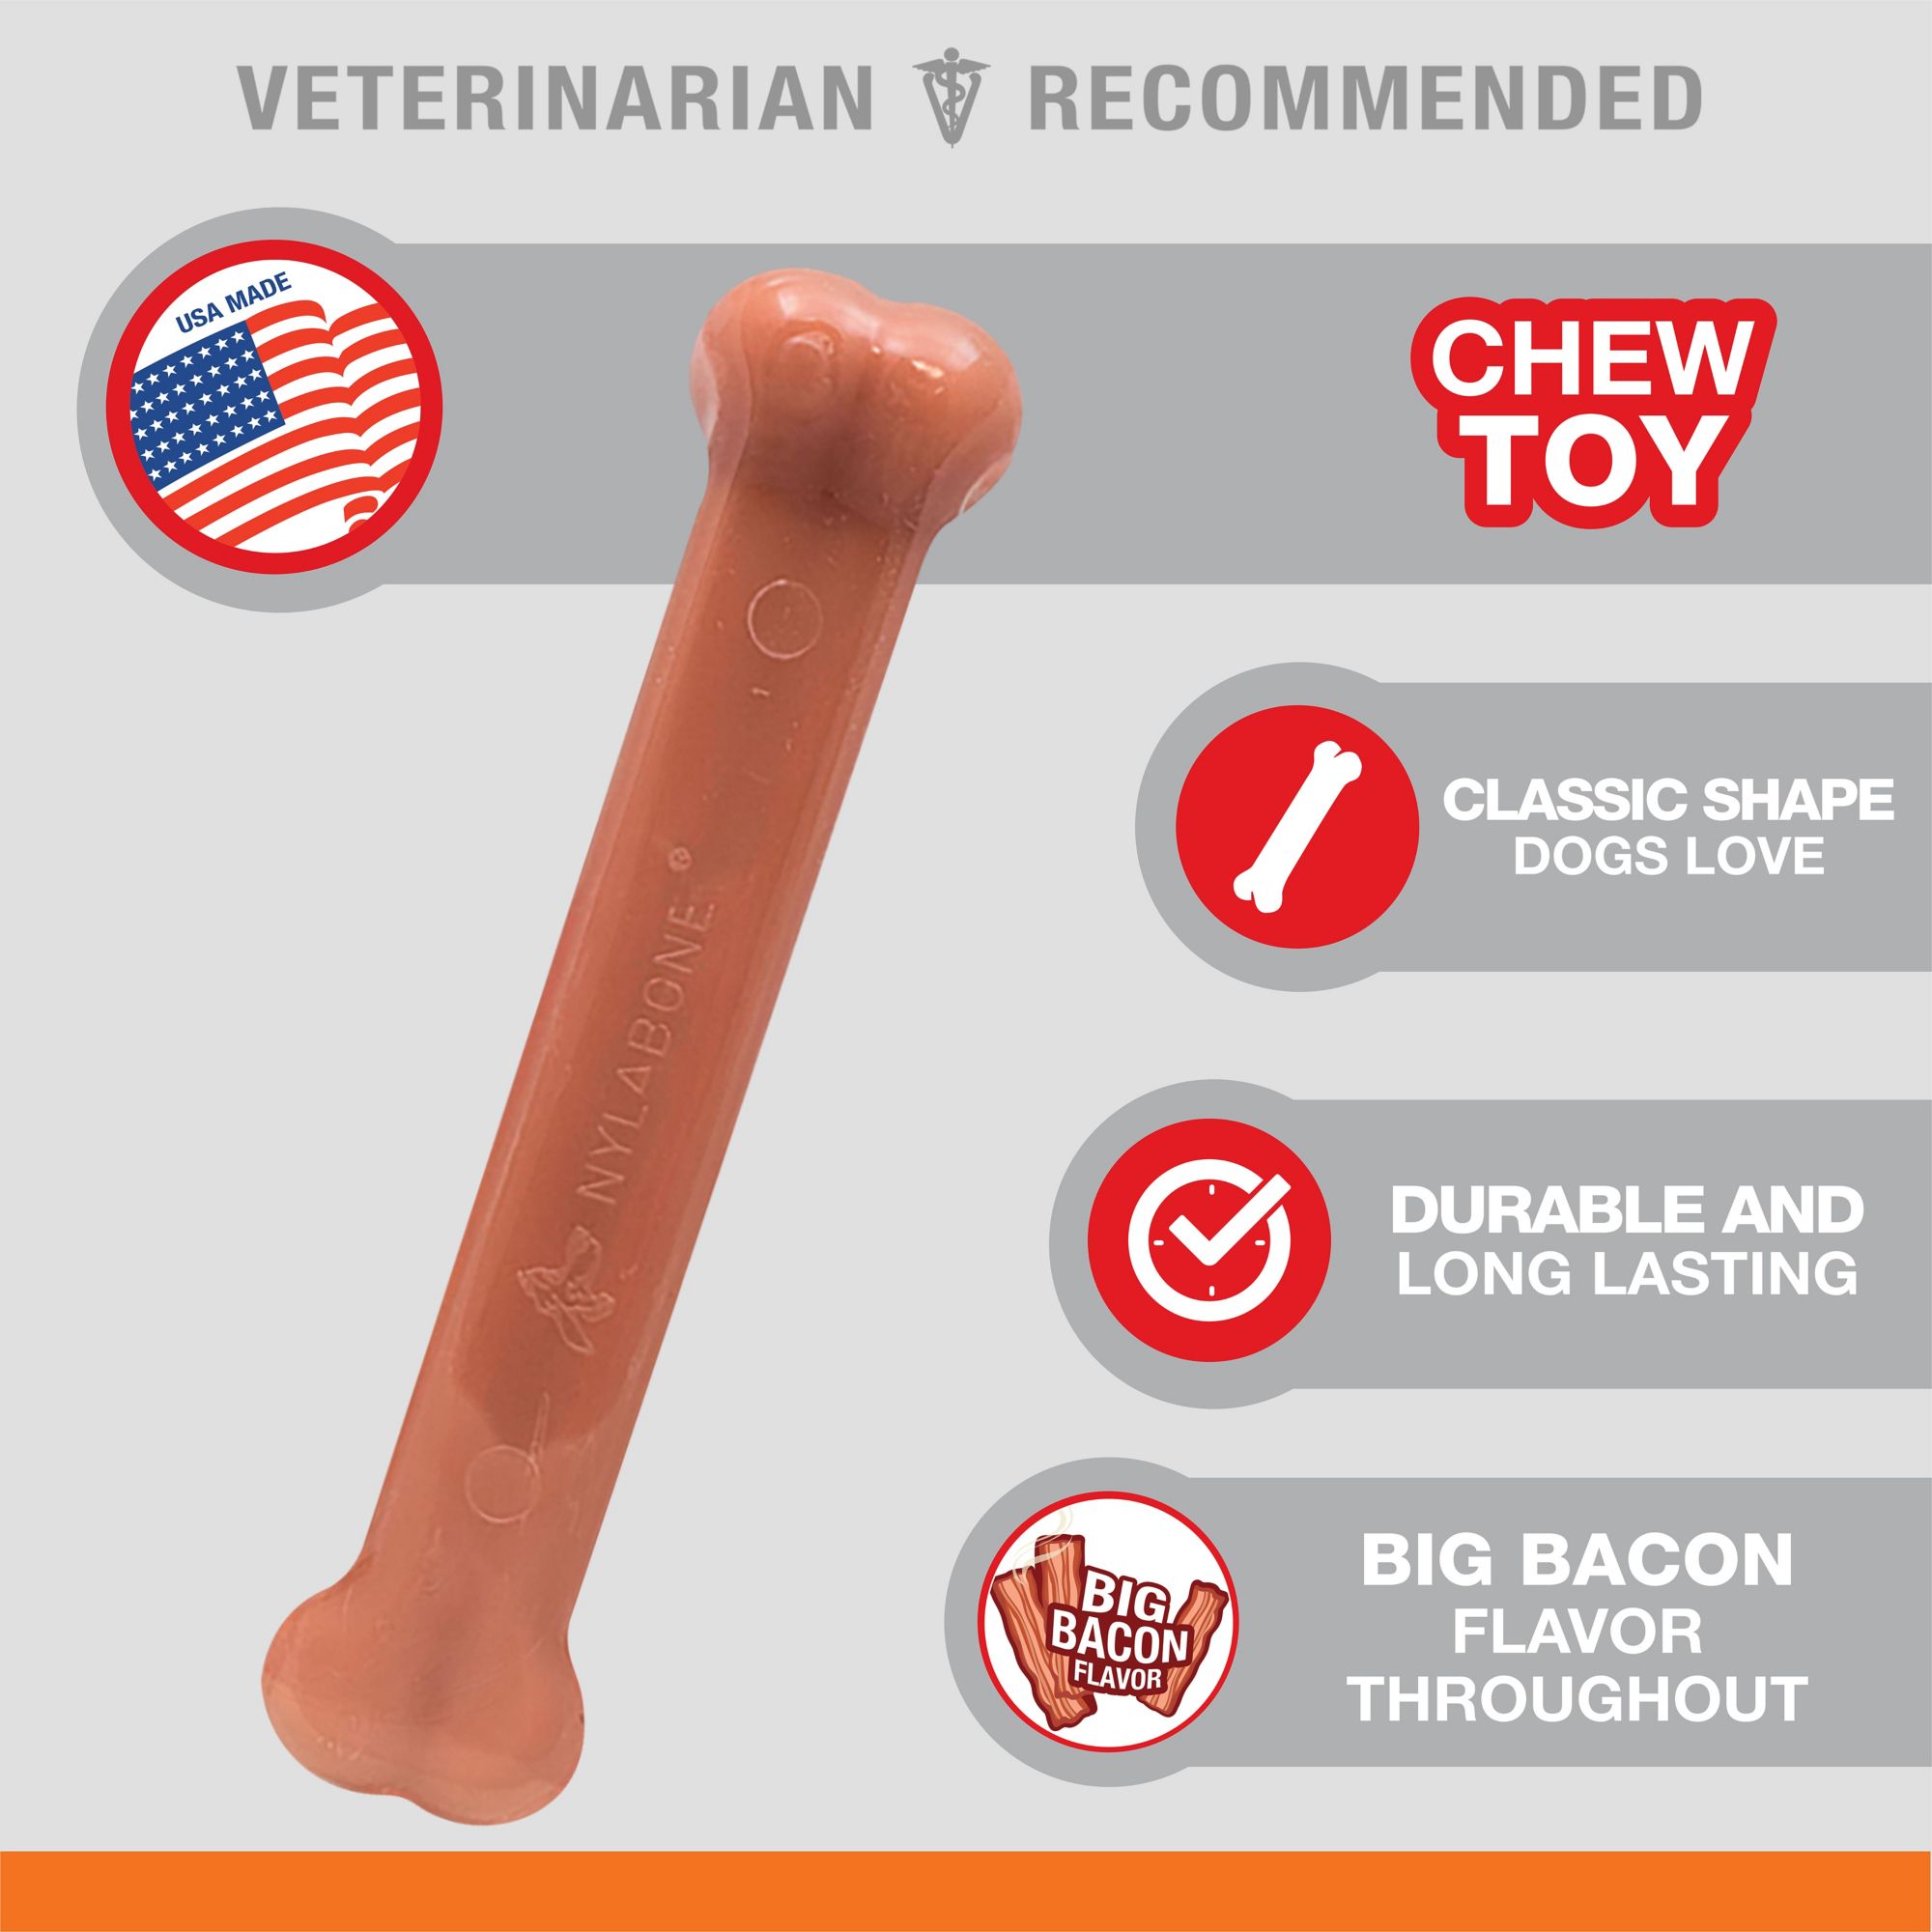 Lumabone Durable Dog Chew Toys, 3-count